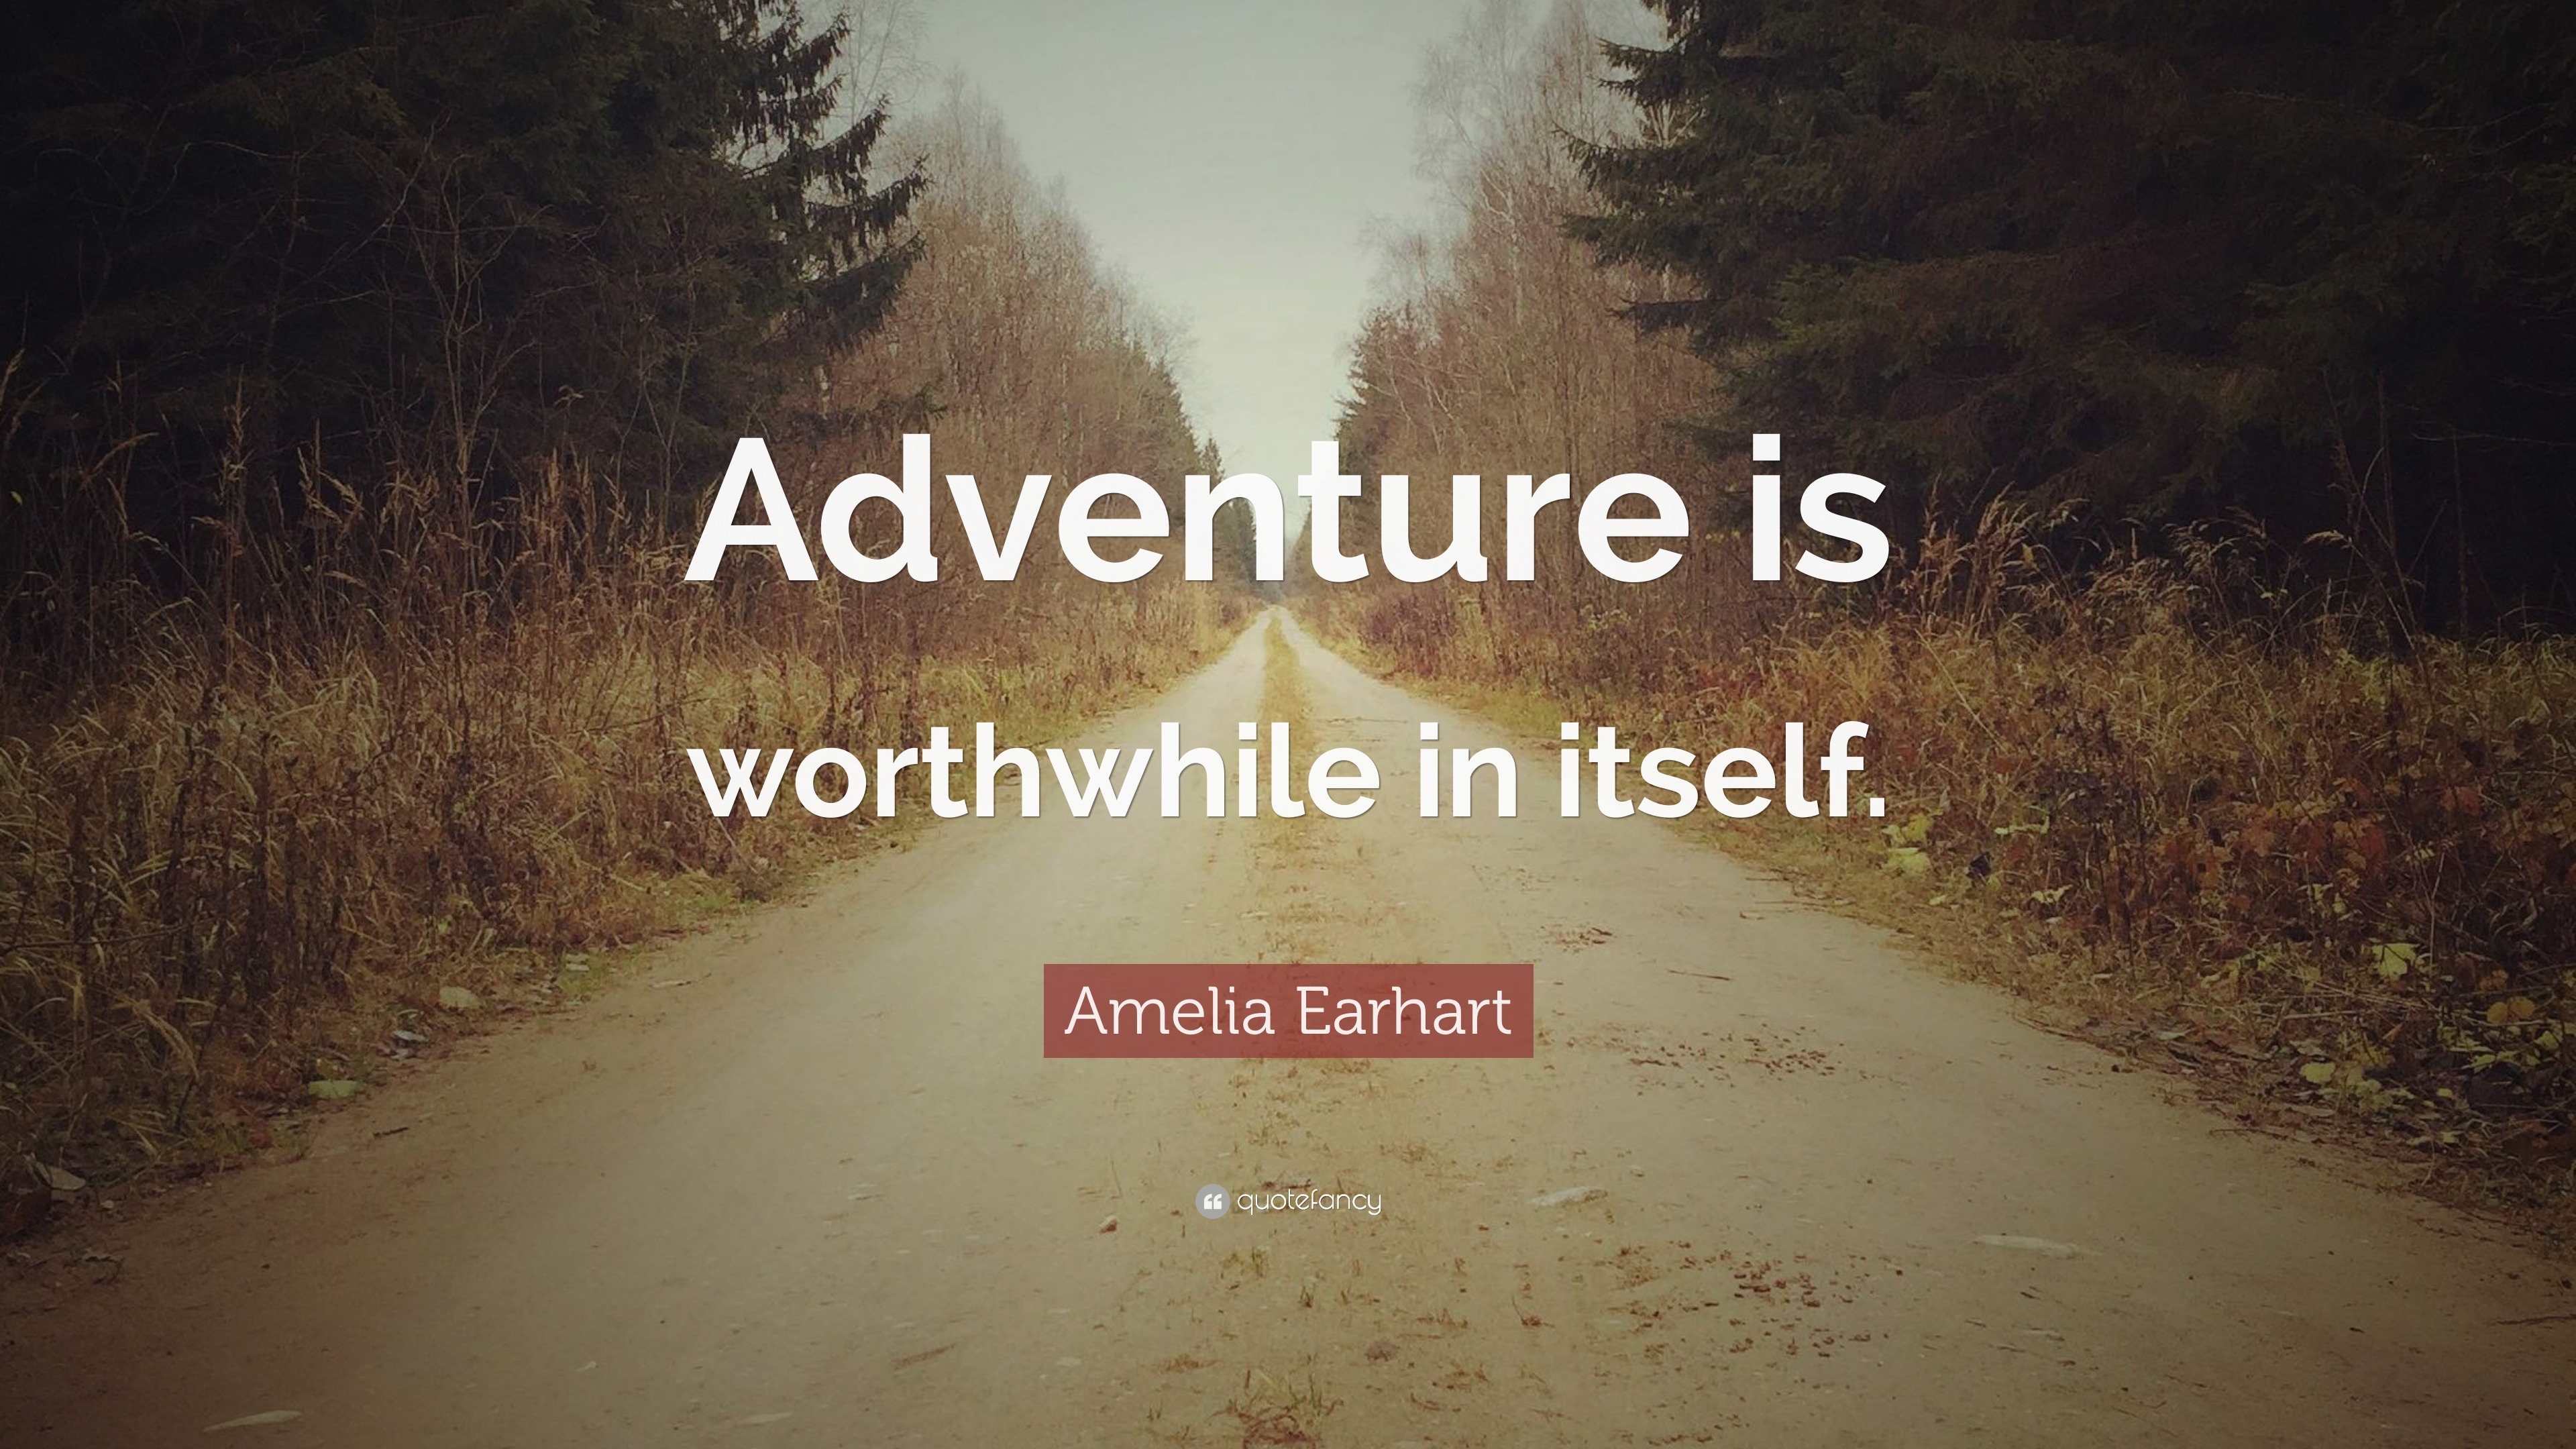 Amelia Earhart Quotes (52 wallpapers) - Quotefancy